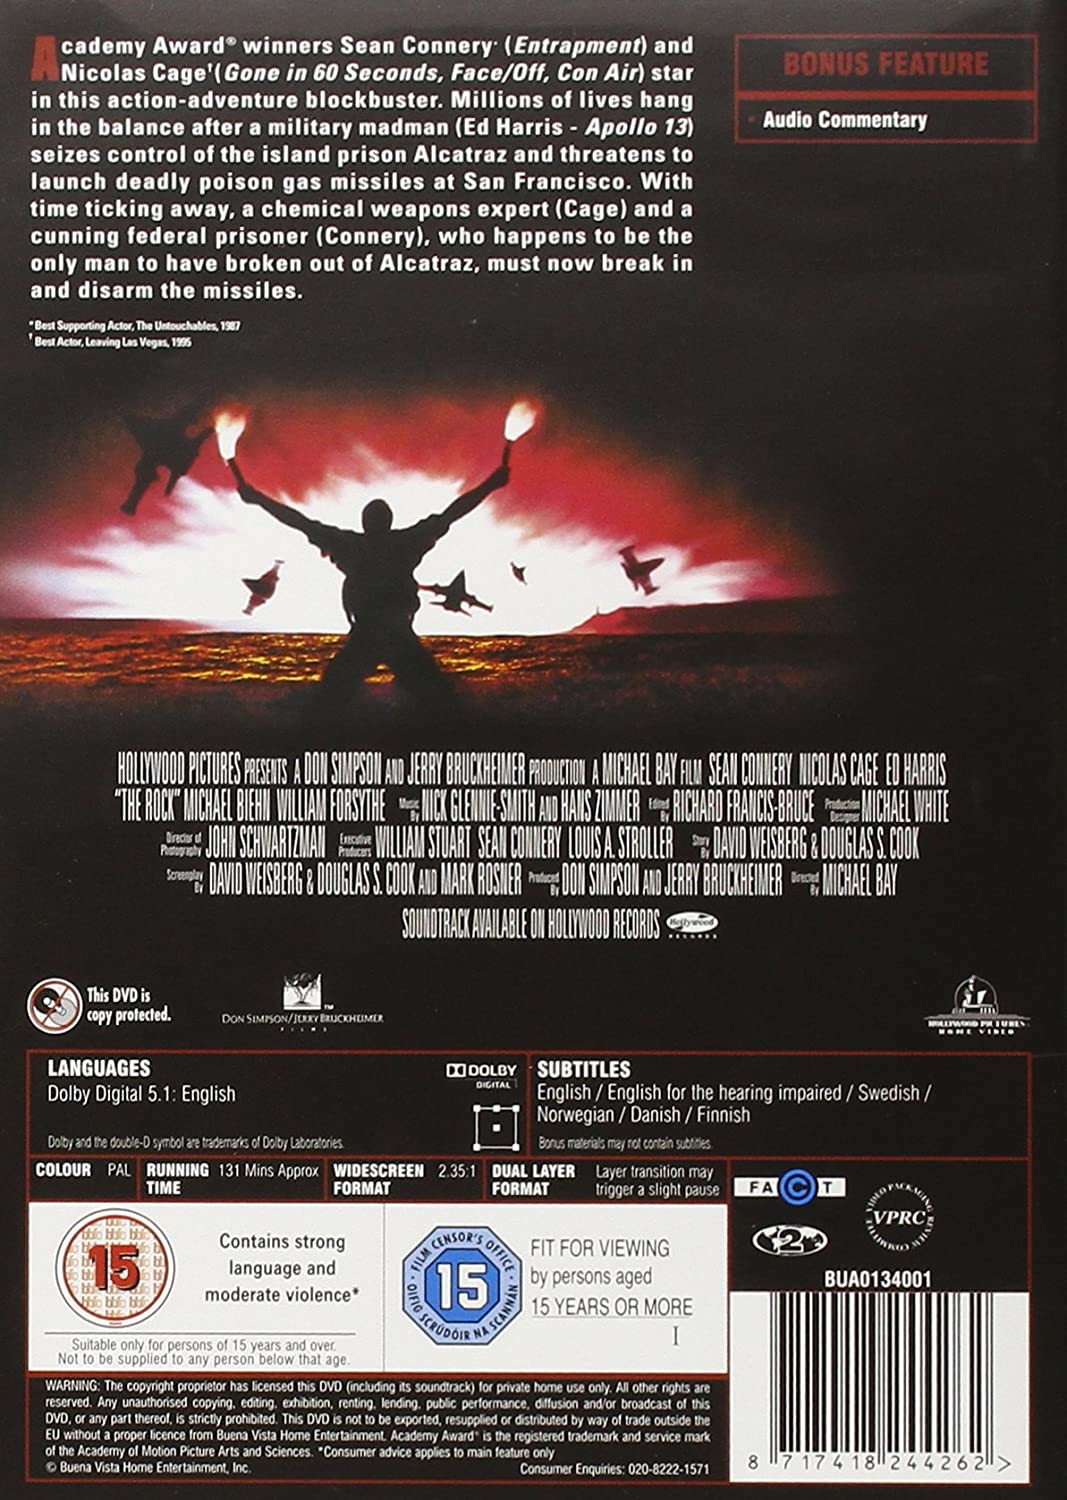 The Rock [DVD]